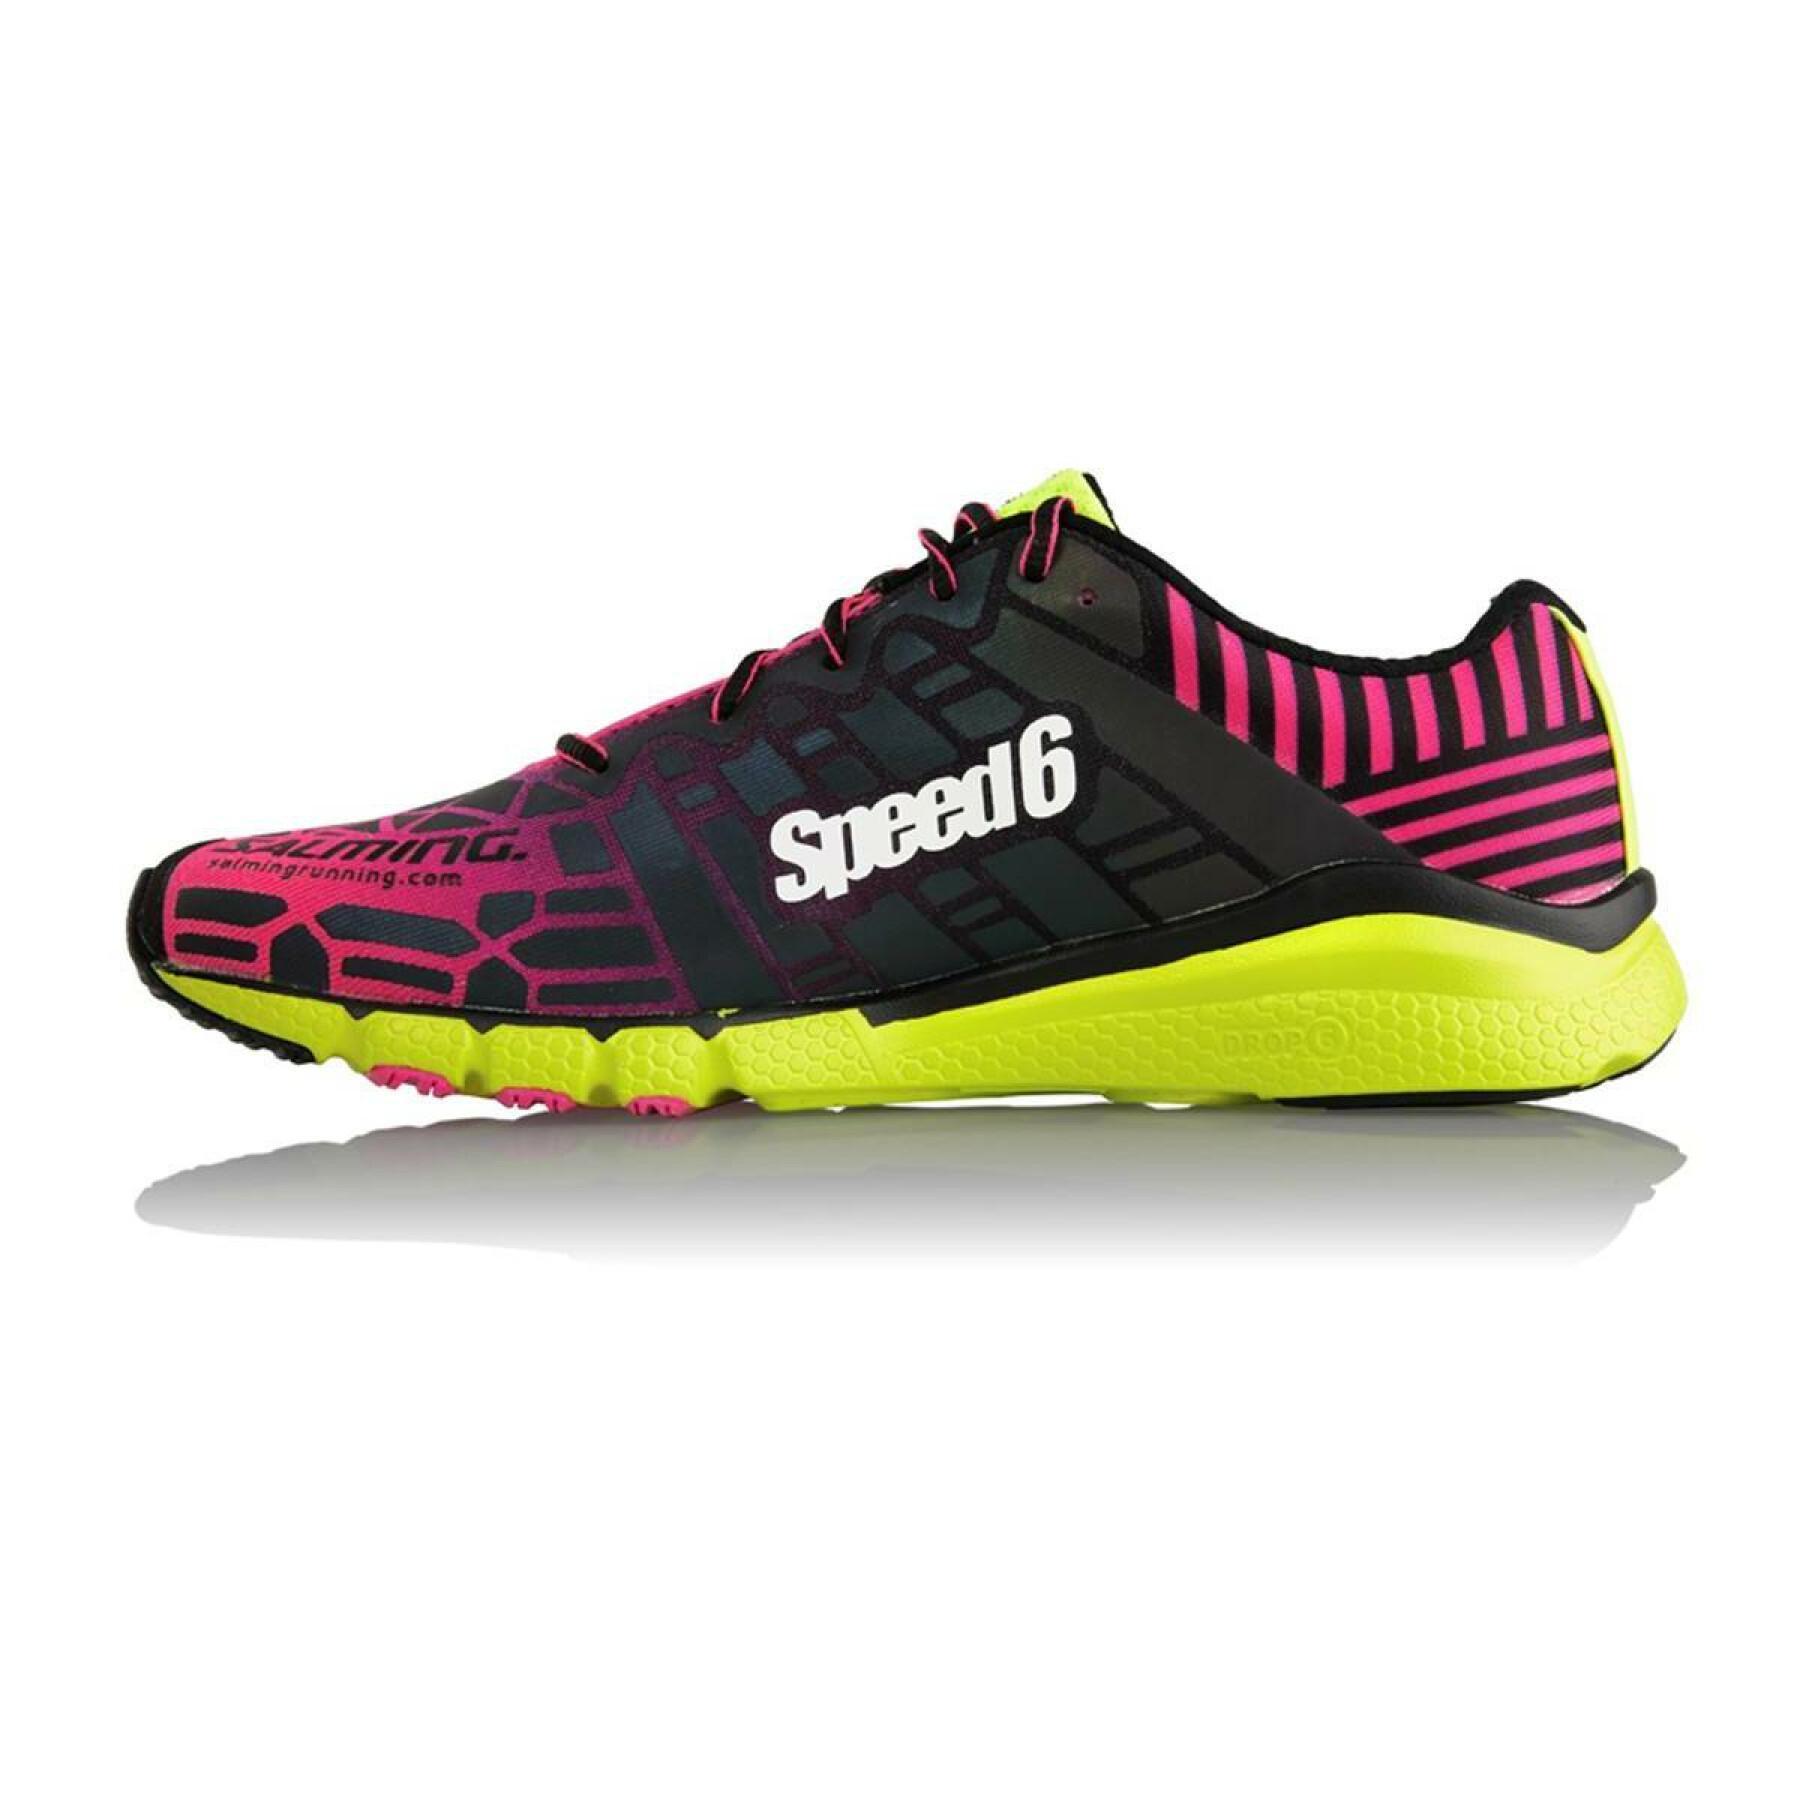 Women's shoes Salming speed6 